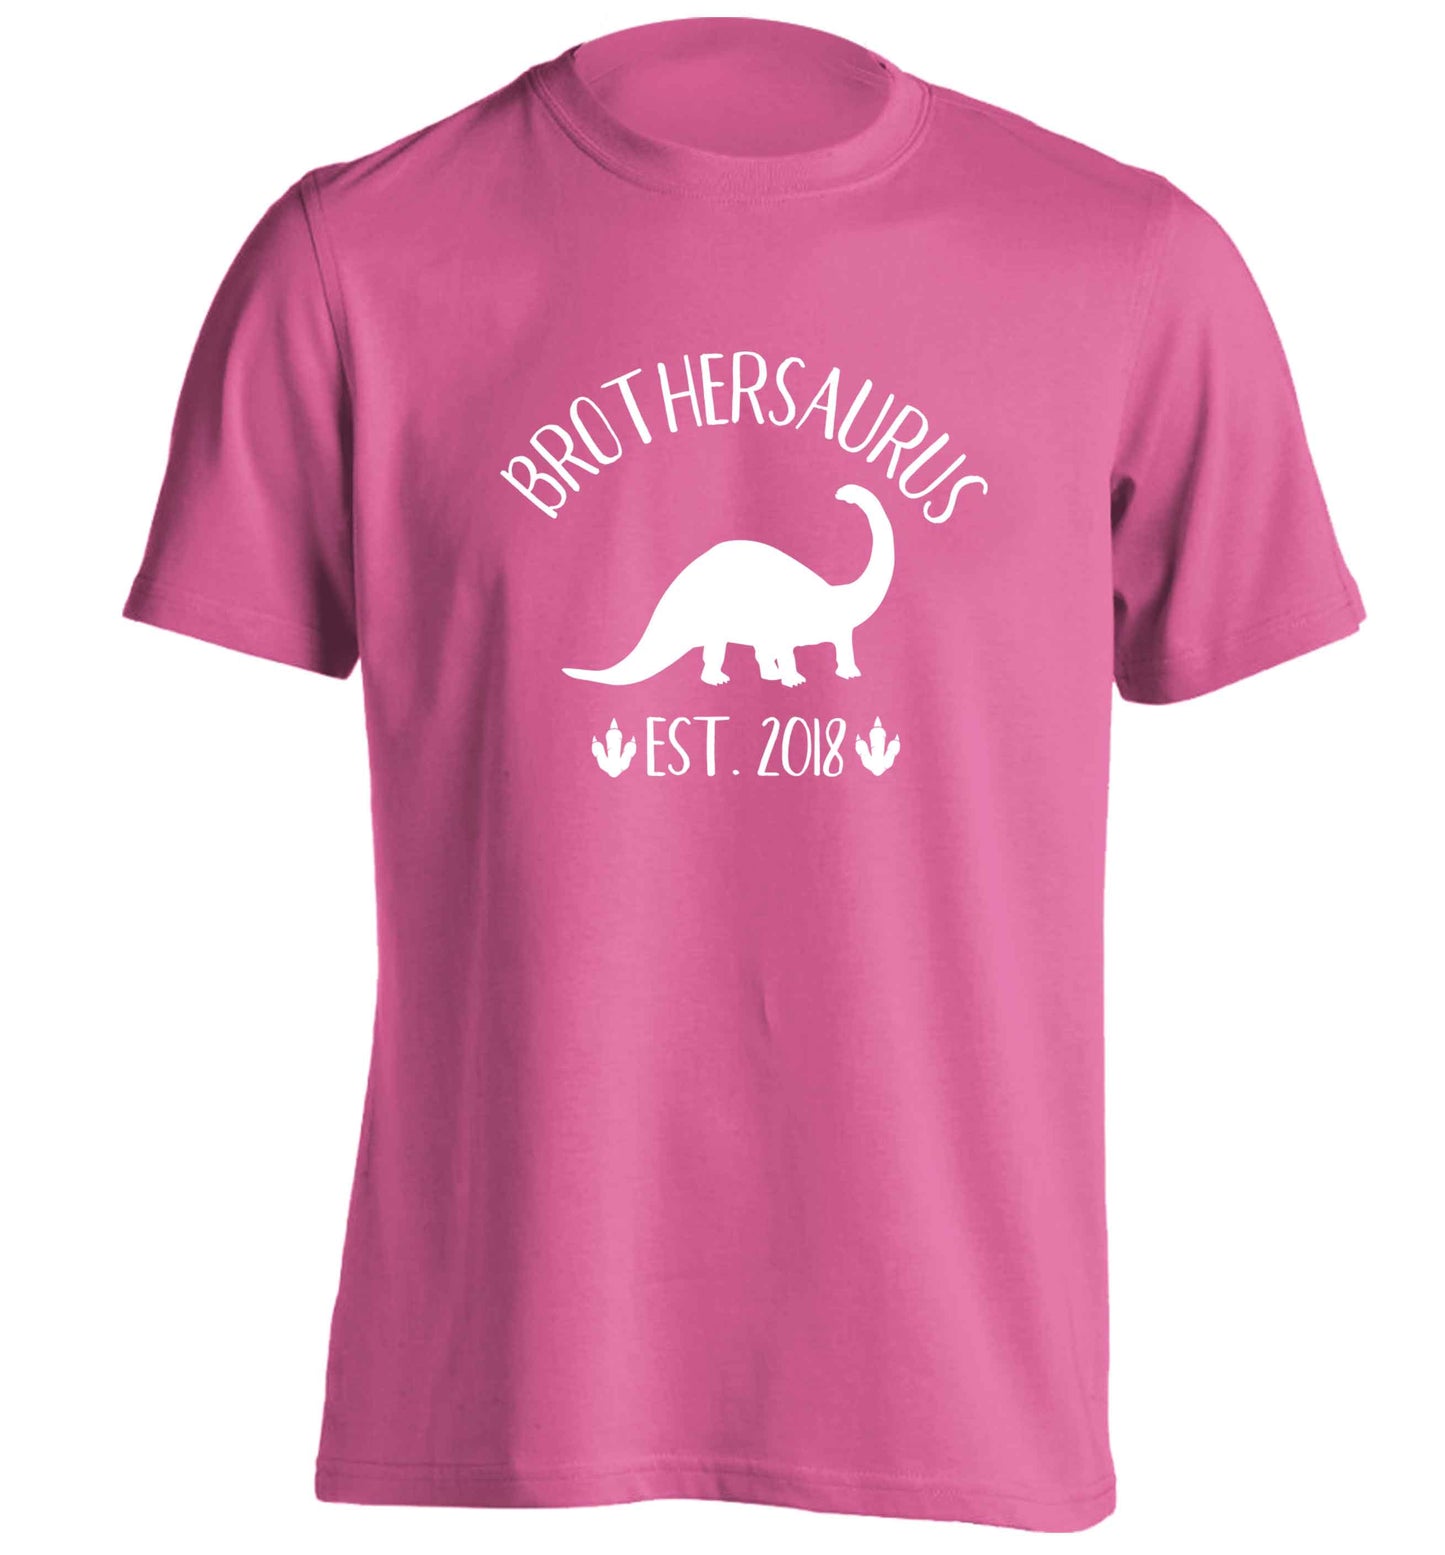 Personalised brothersaurus since (custom date) adults unisex pink Tshirt 2XL